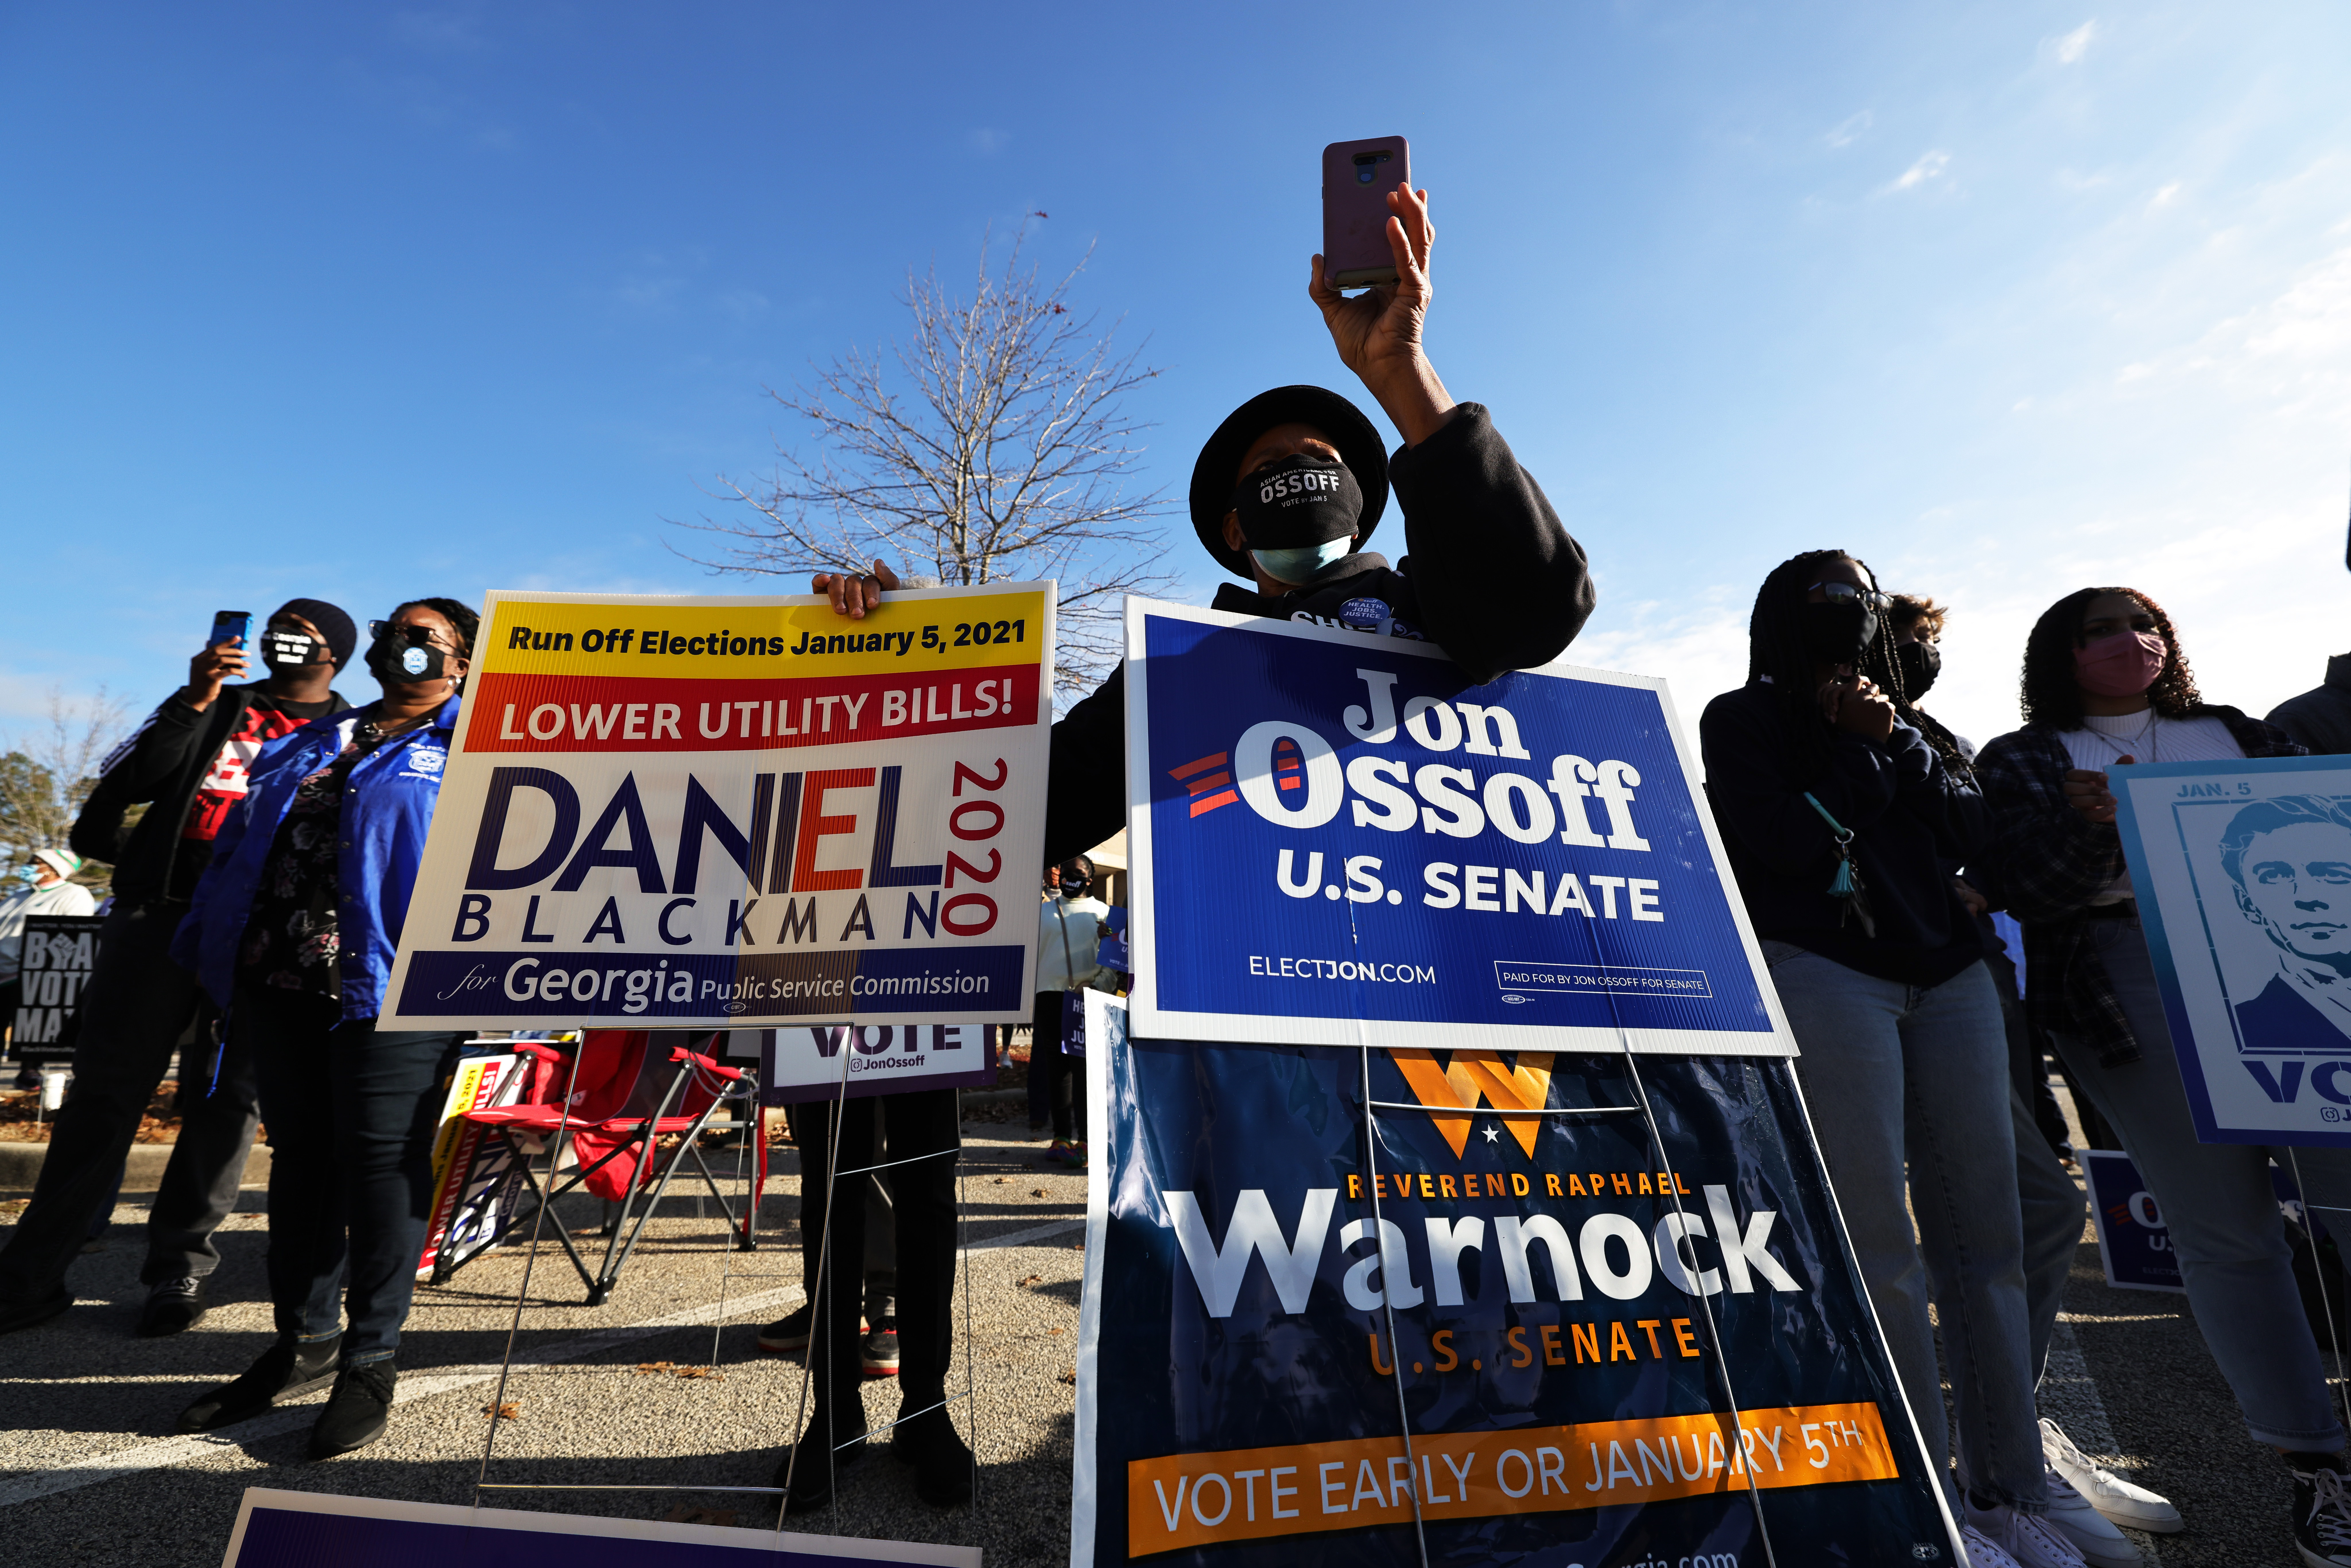 Senate Candidates Jon Ossoff And Rev. Warnock Campaign Day Before Georgia Runoff Election